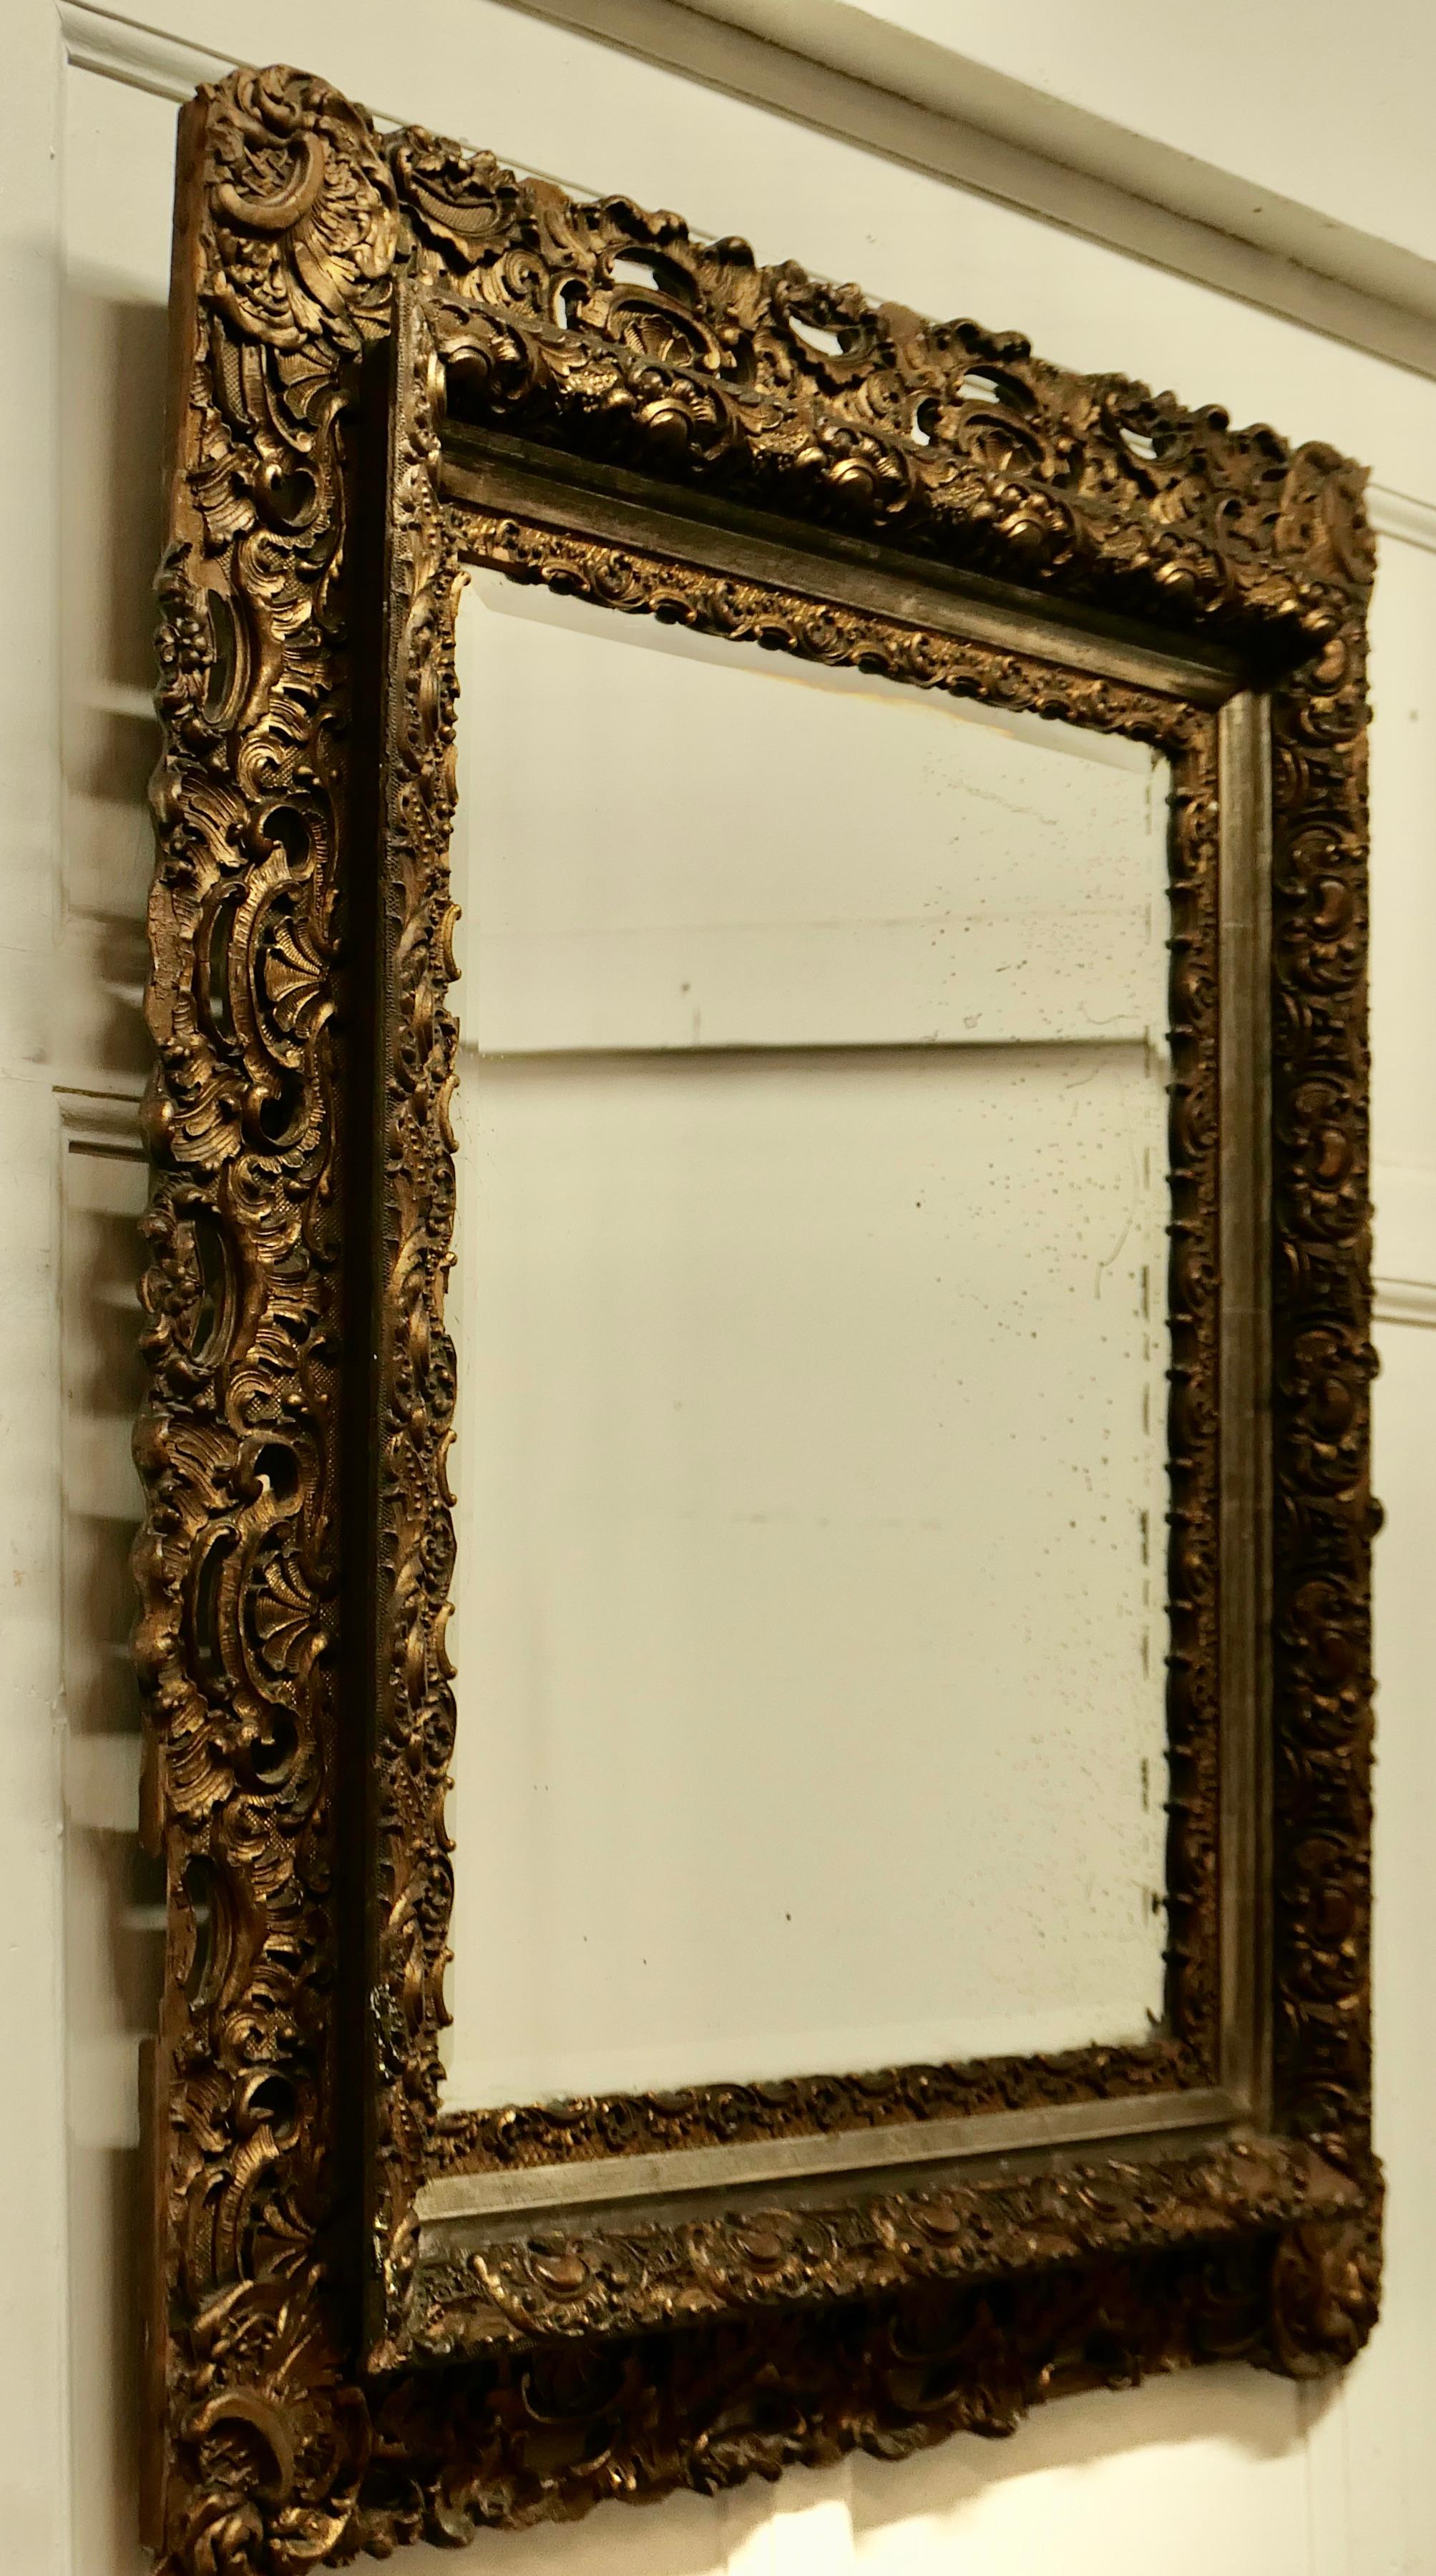 Rococo Grand miroir mural rococo carré doré du début du XIXe siècle en vente